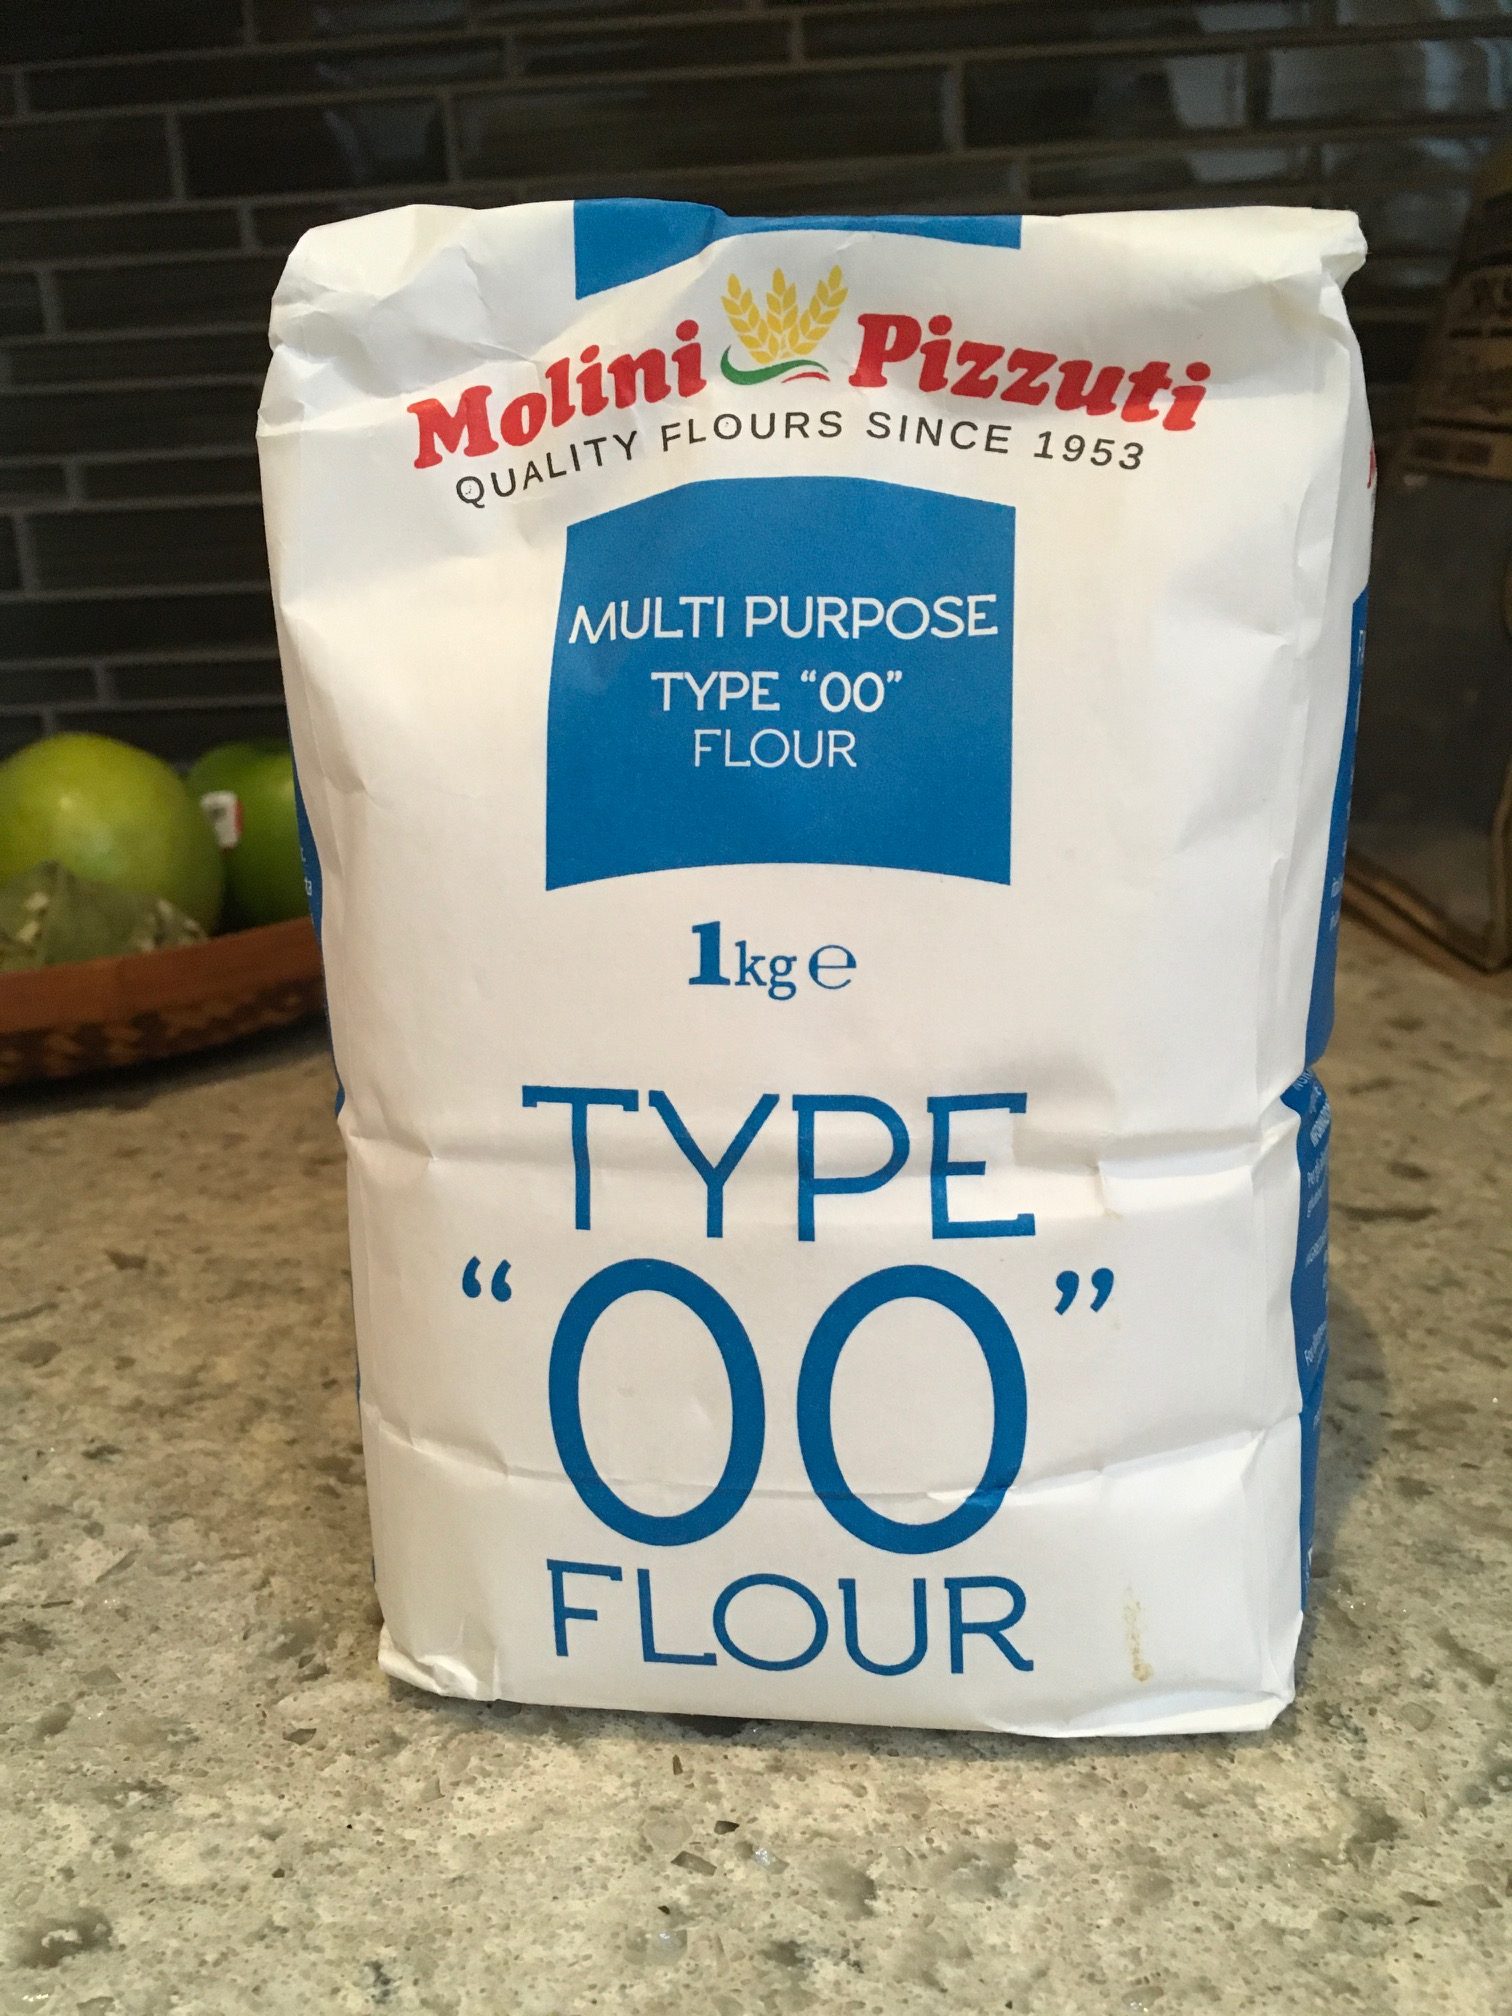 All-purpose tipo 00 flour